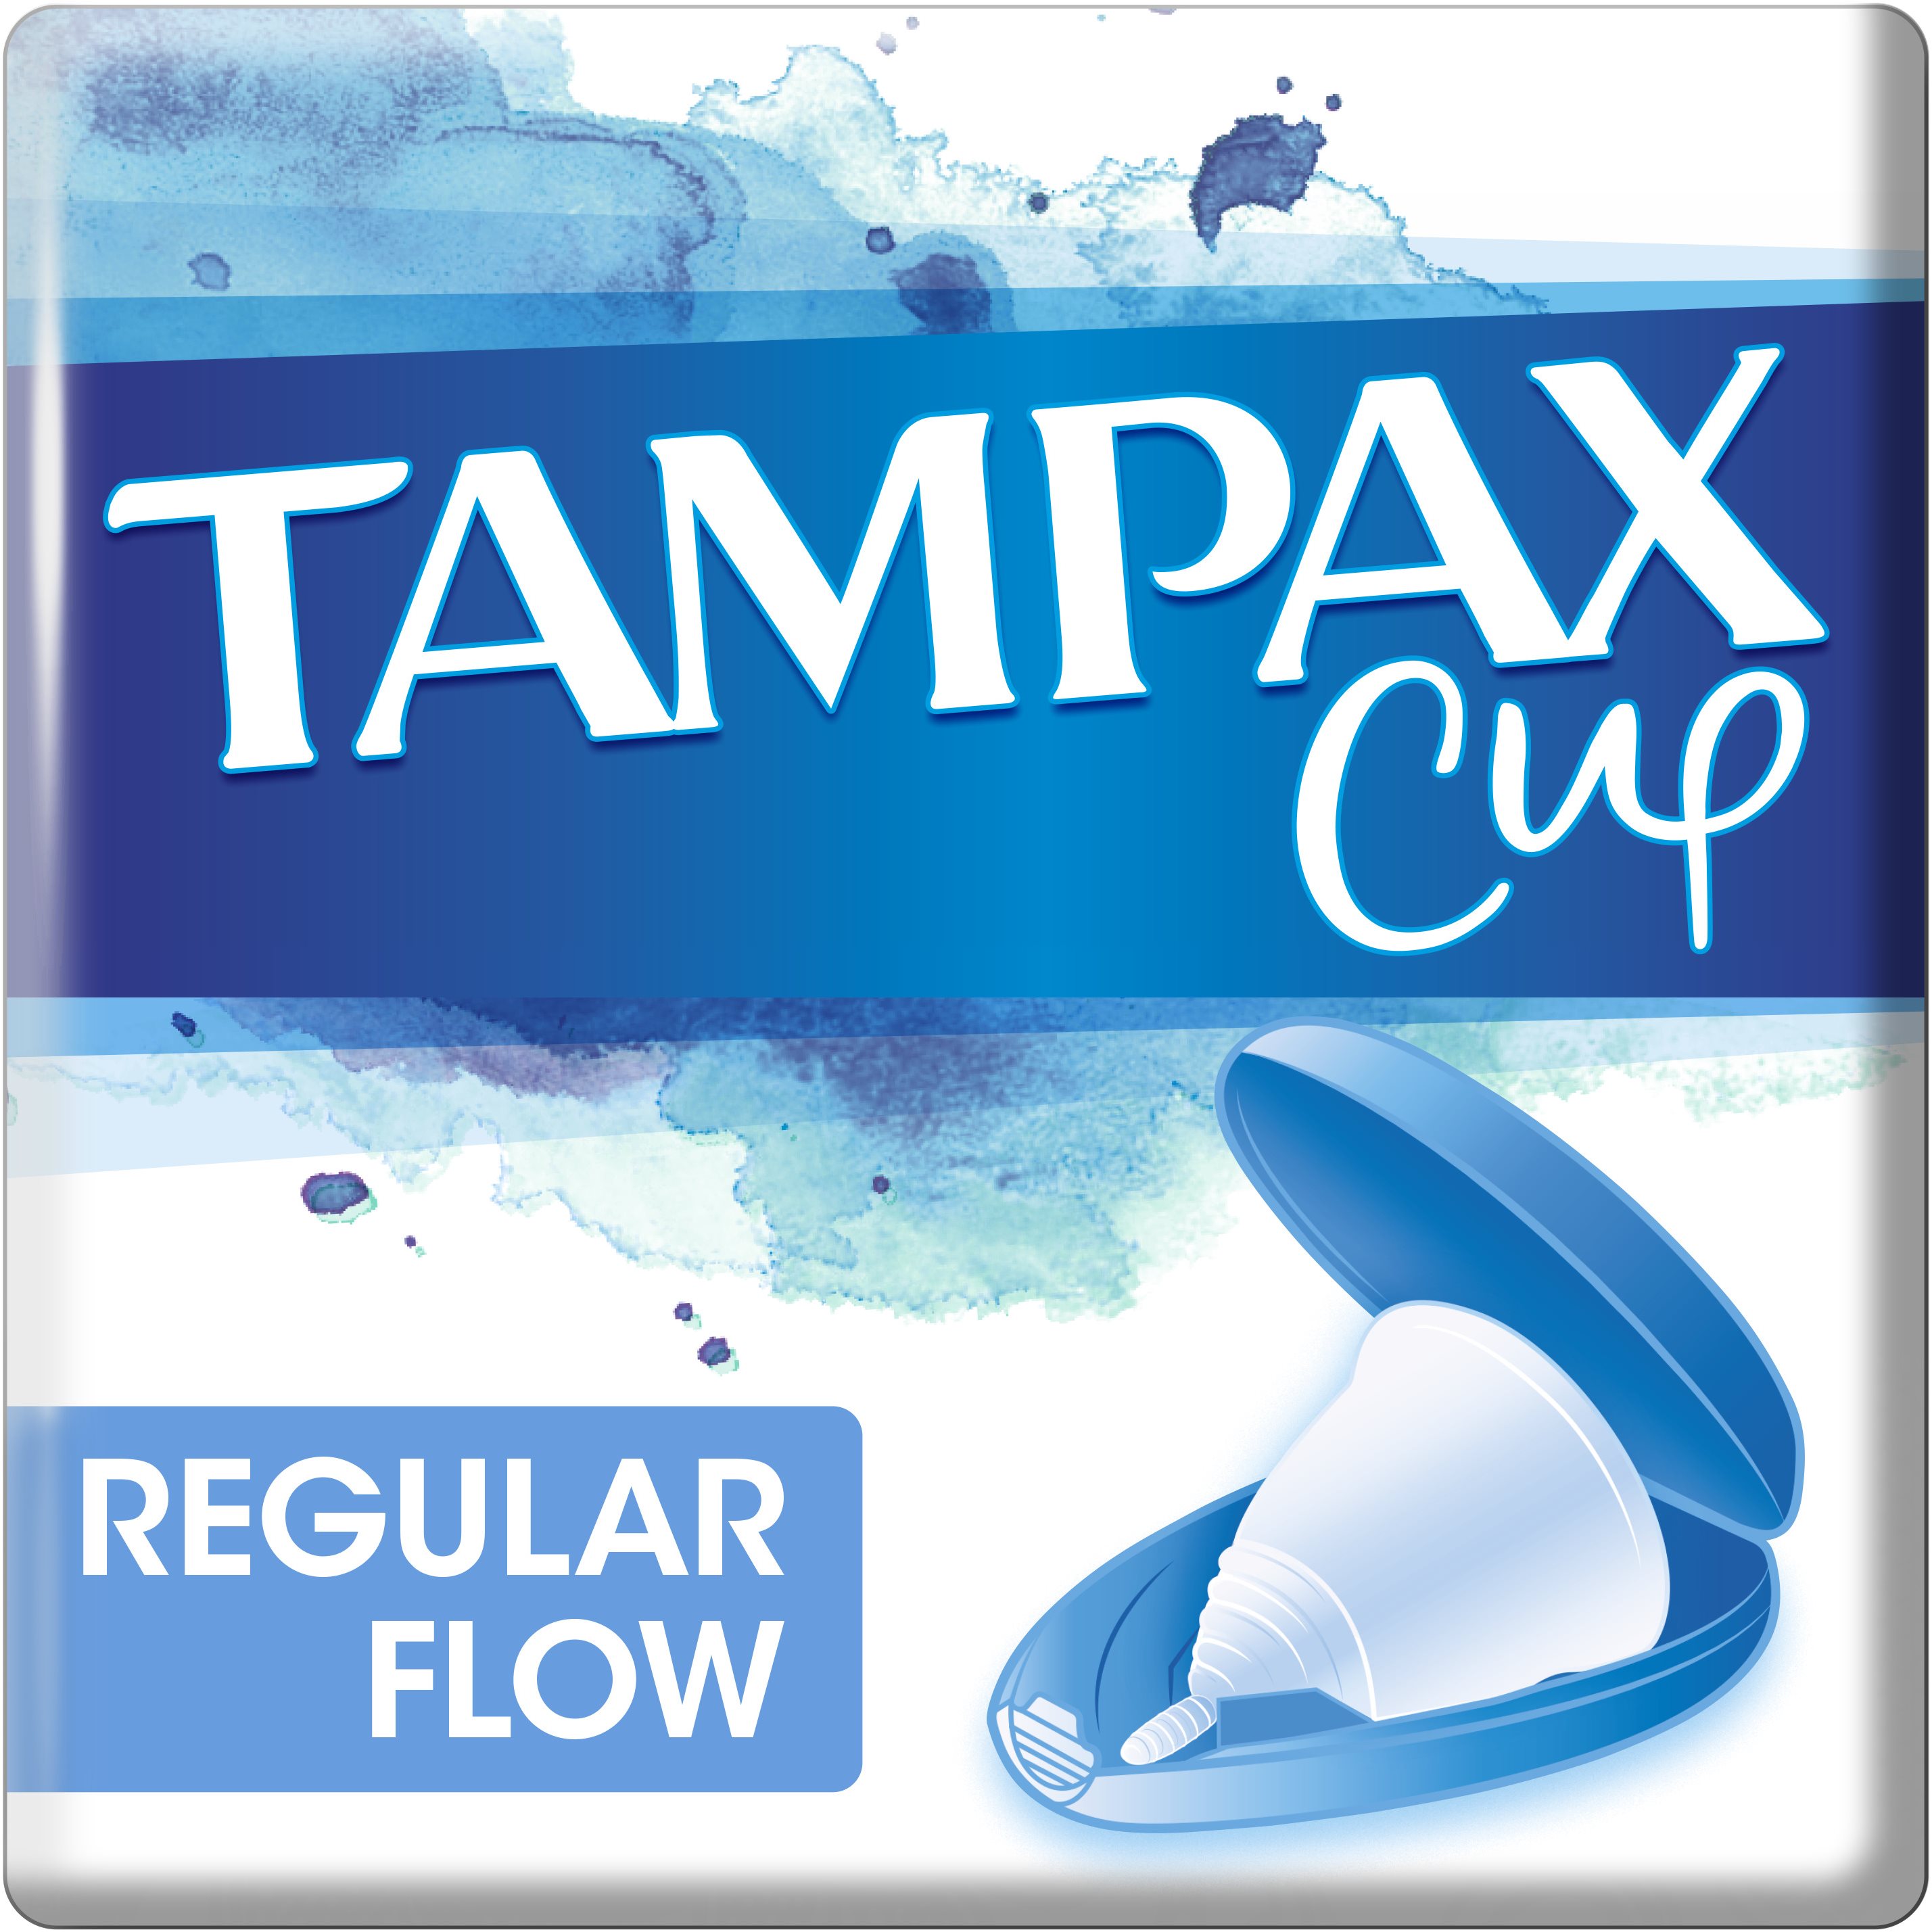 TAMPAX Regular Flow